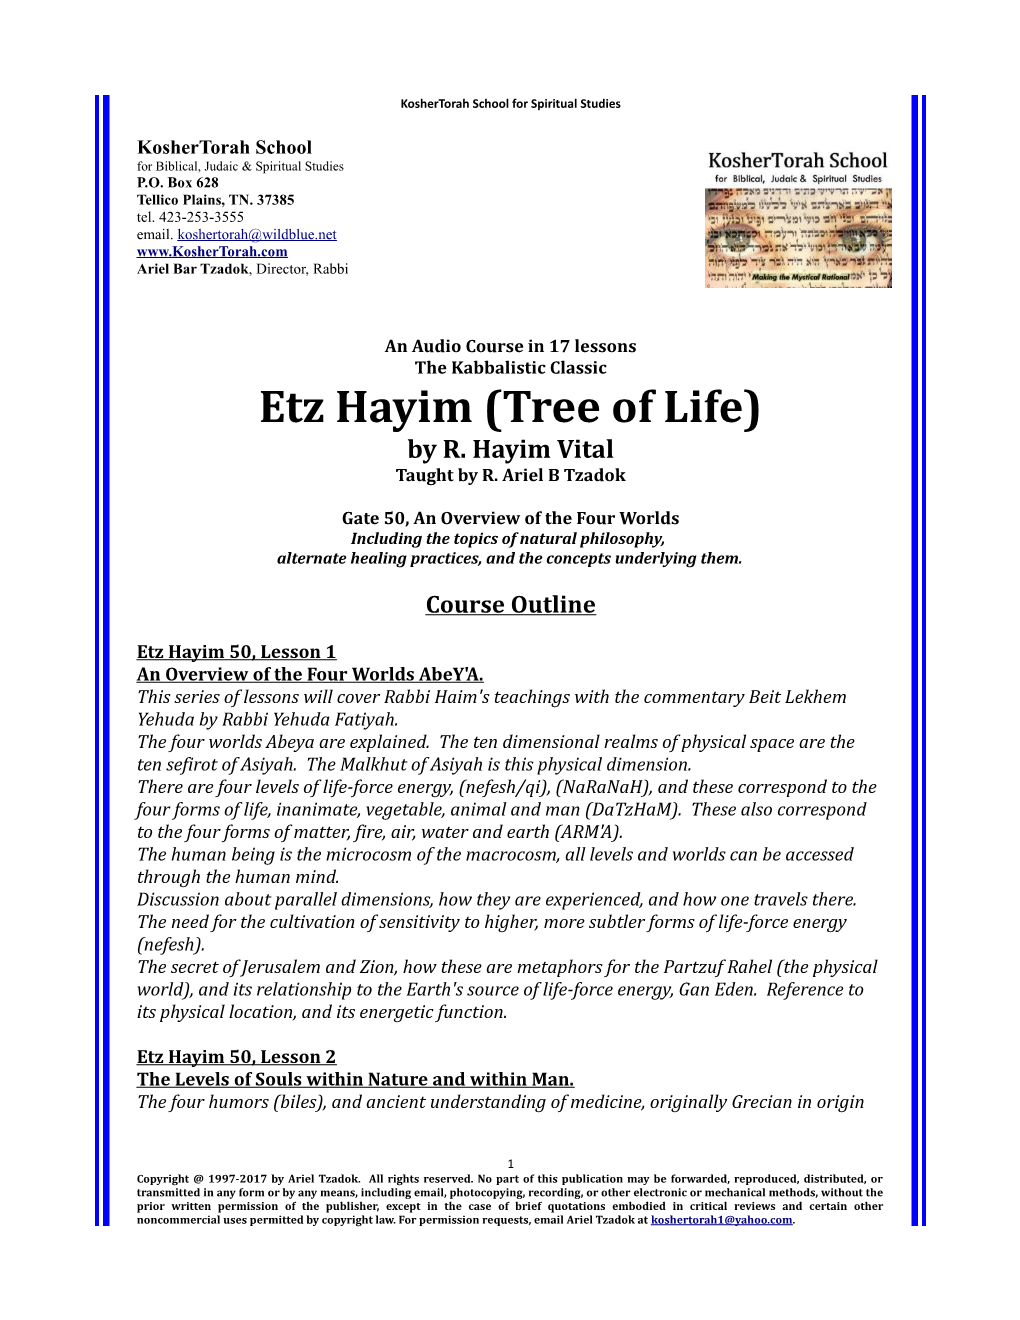 Etz Hayim (Tree of Life) by R